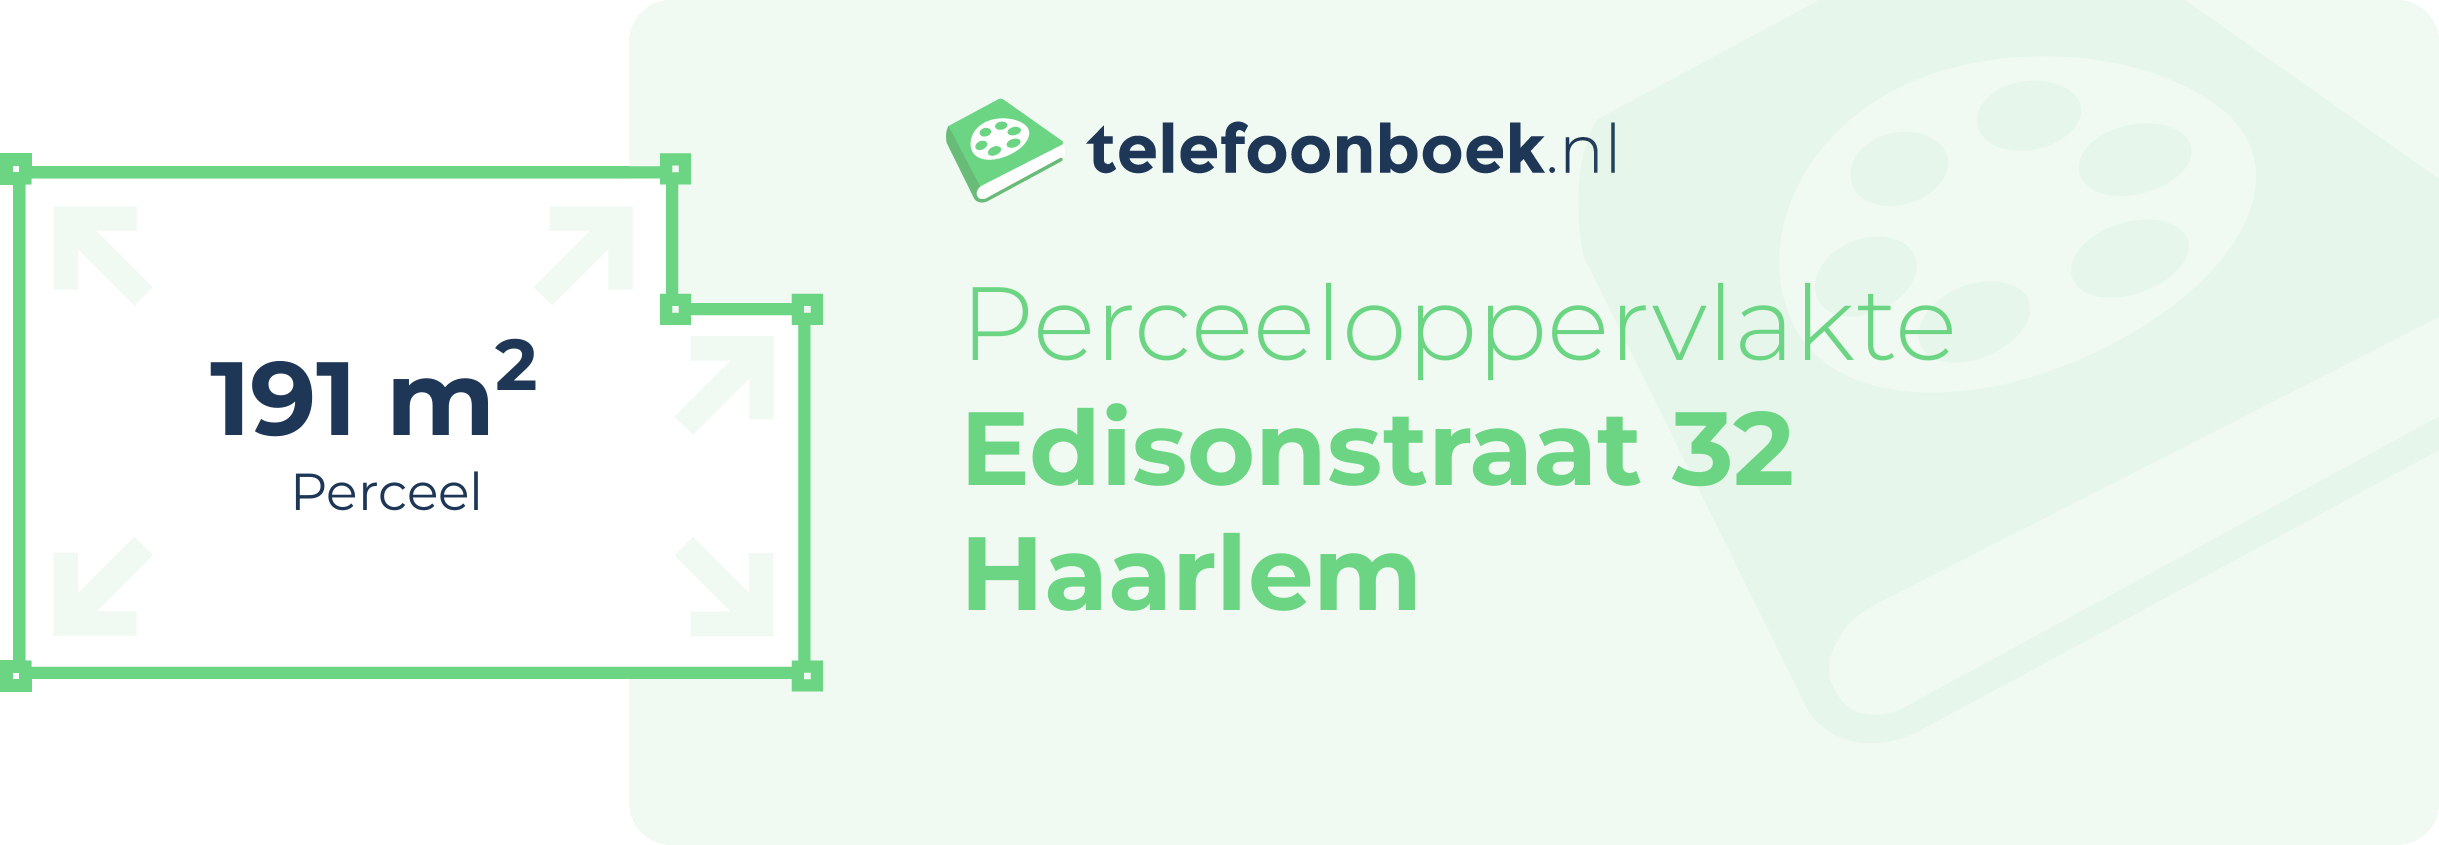 Perceeloppervlakte Edisonstraat 32 Haarlem